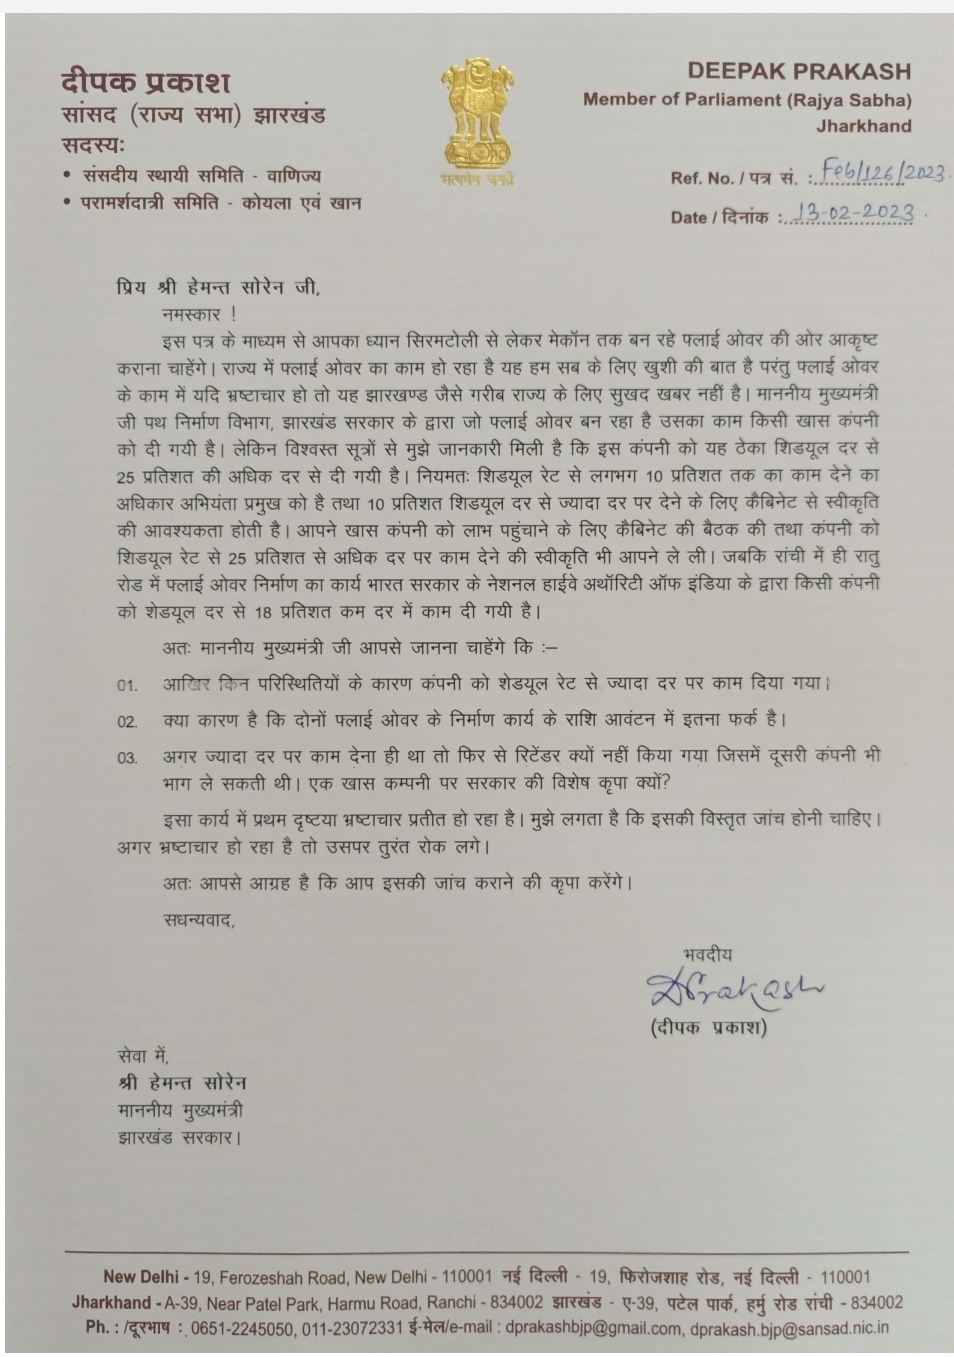 Deepak Prakash Wrote Letter To Chief Minister